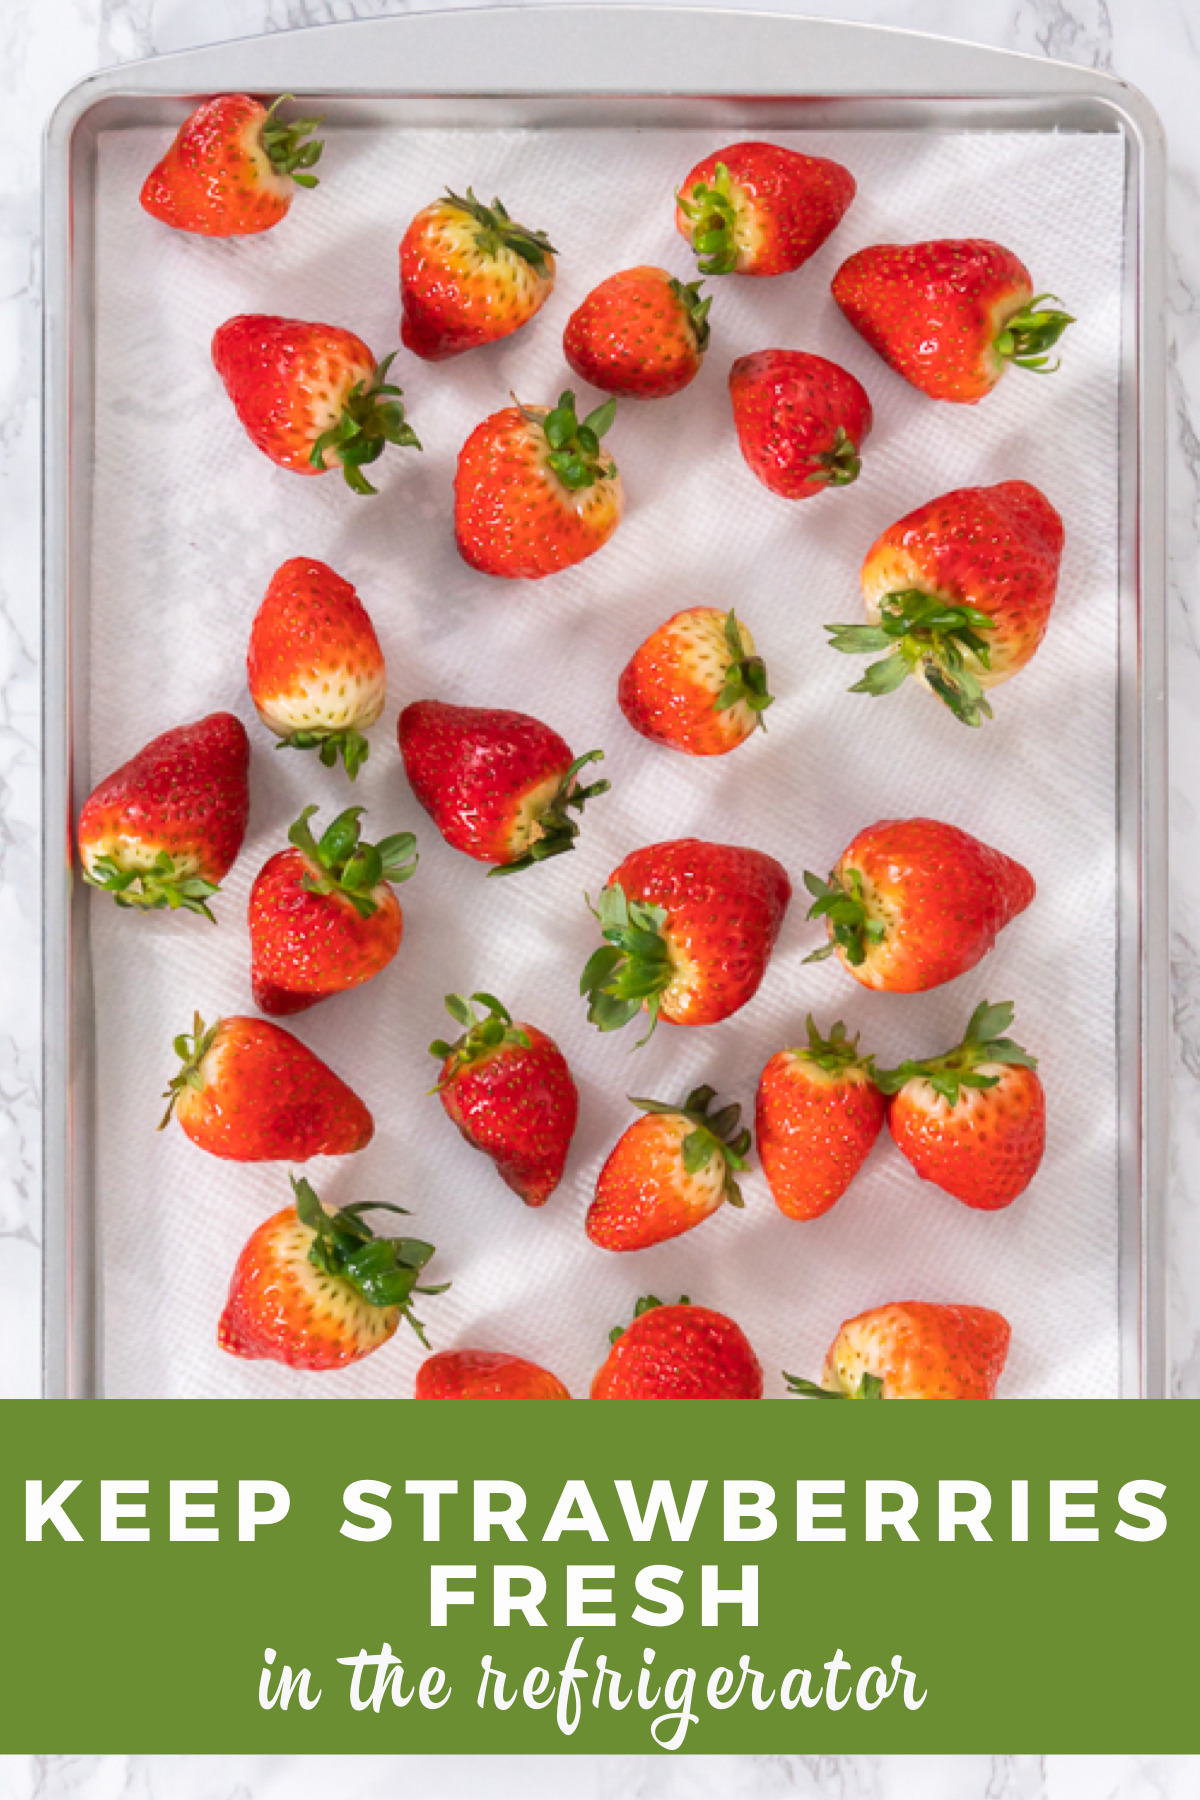 Keep strawberries fresh in the refrigerator